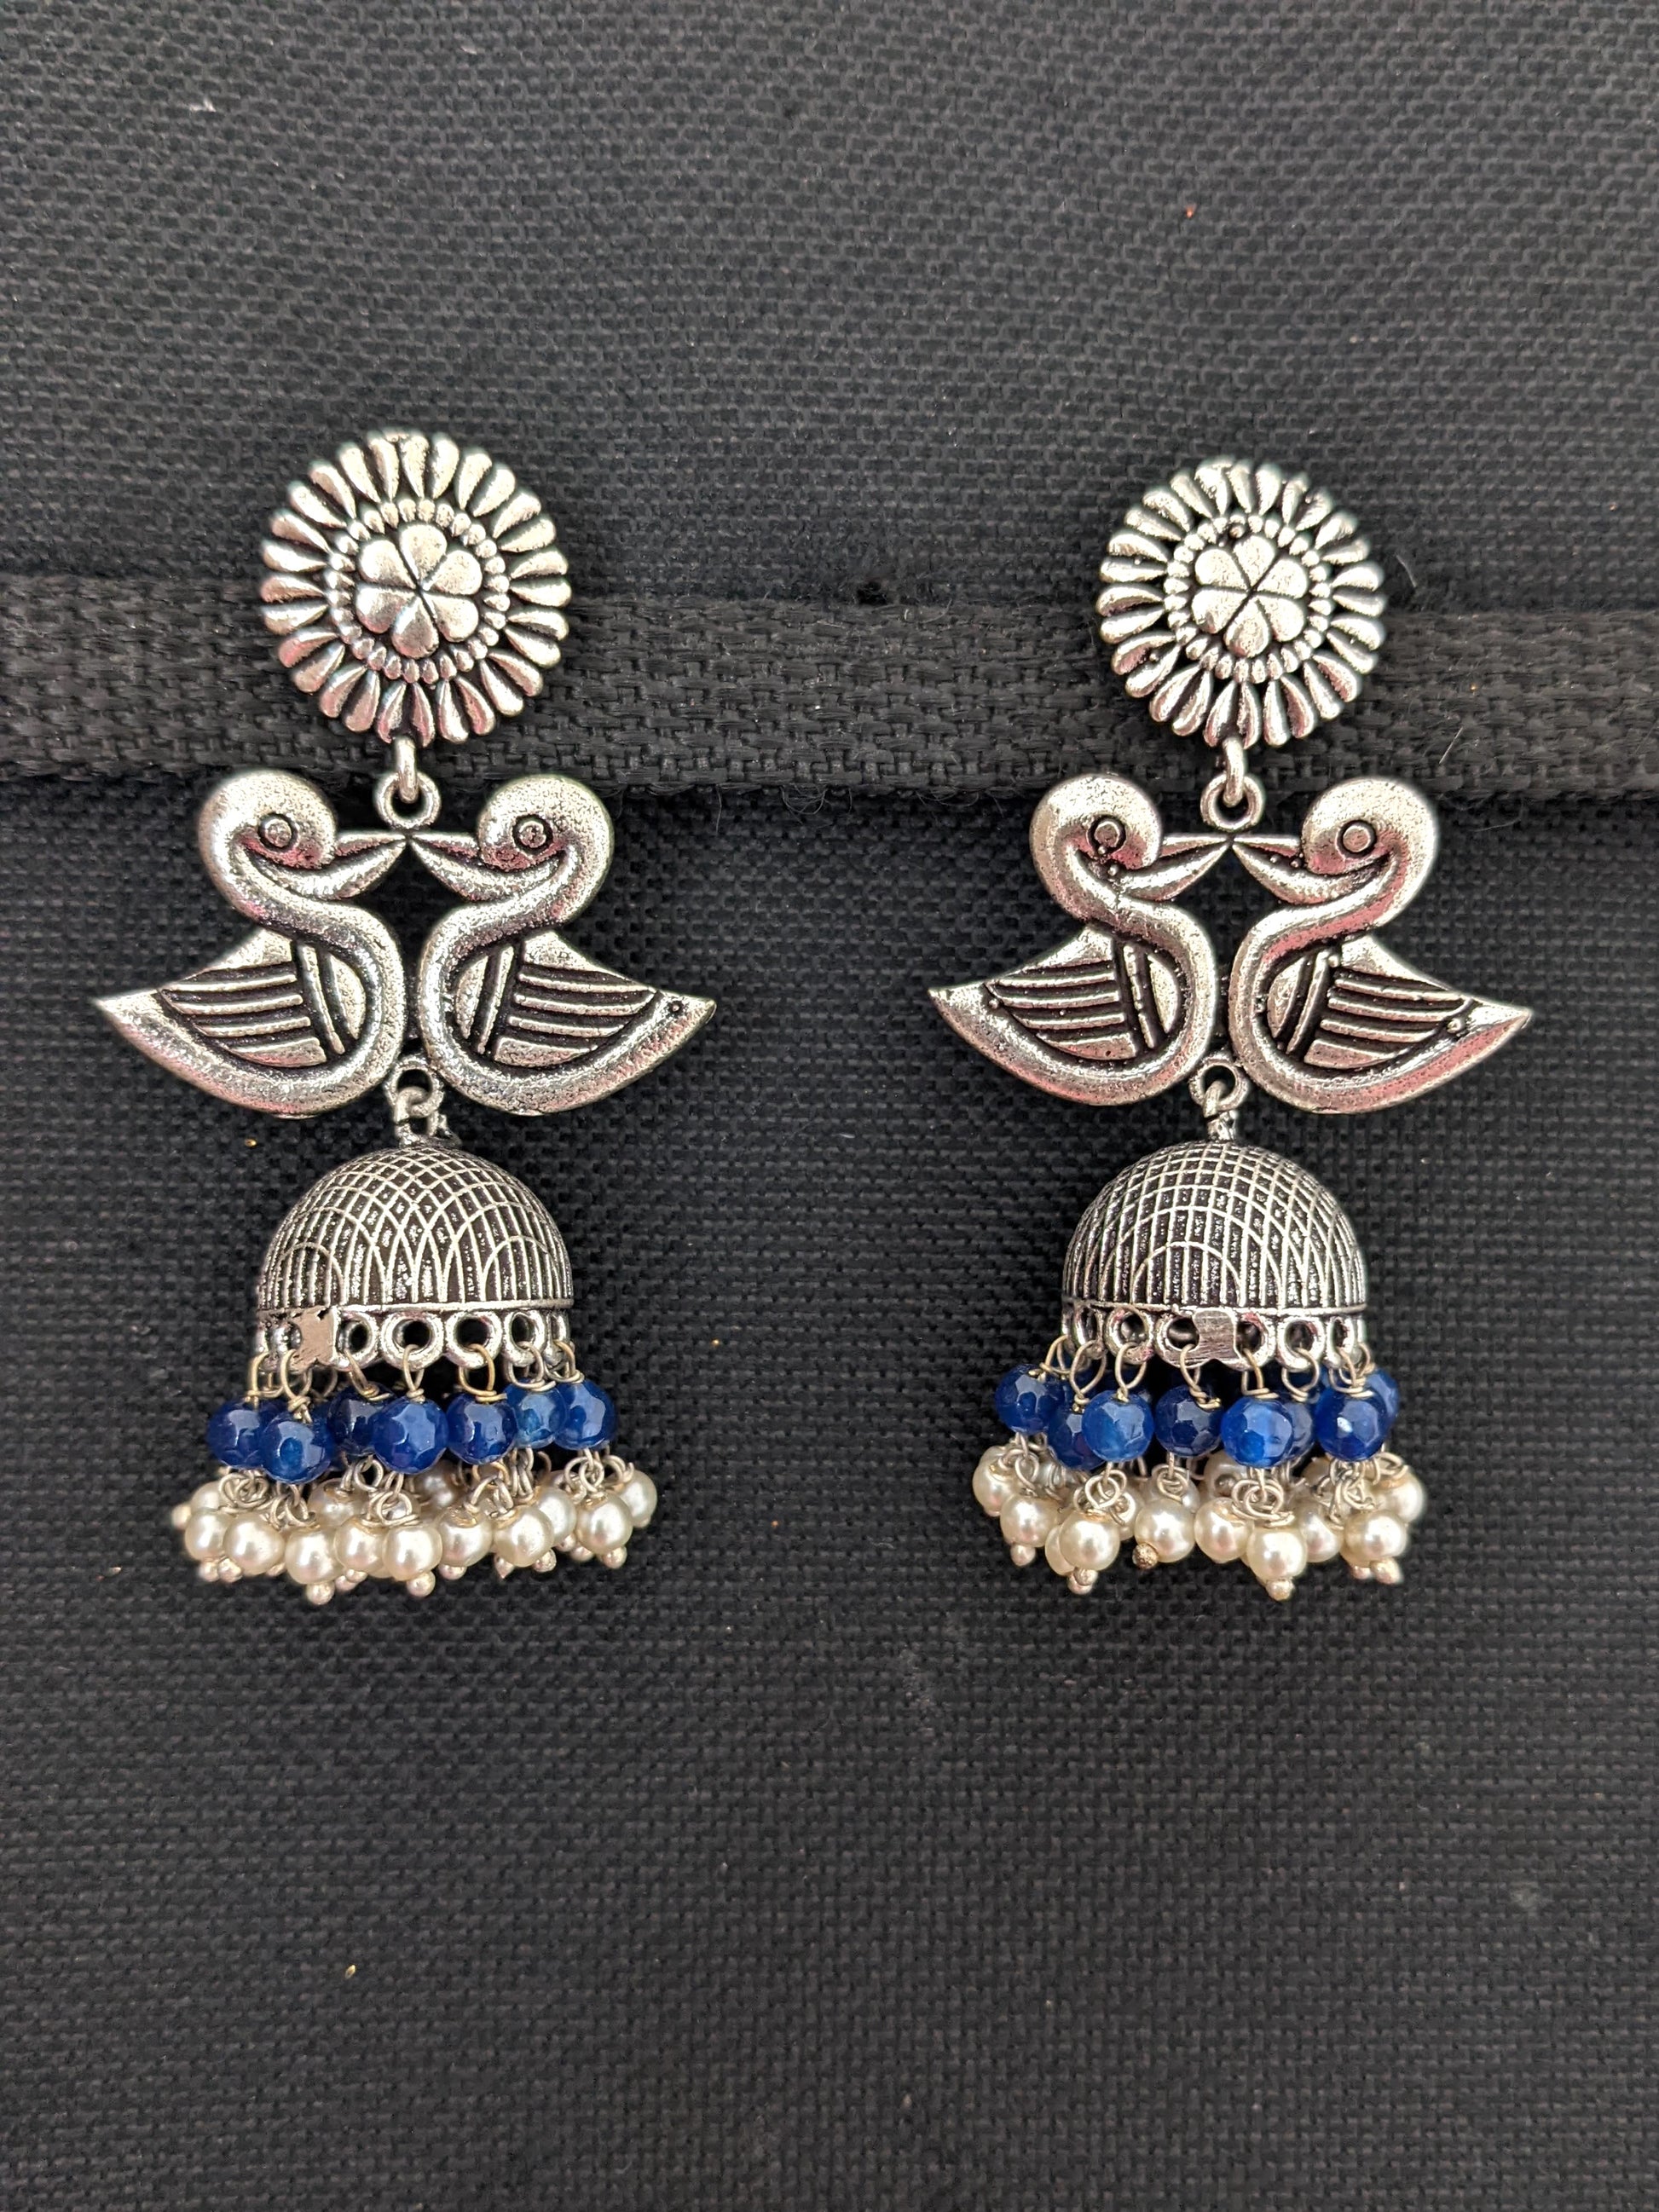 Oxidized silver dual swan jhumka Earrings - Simpliful